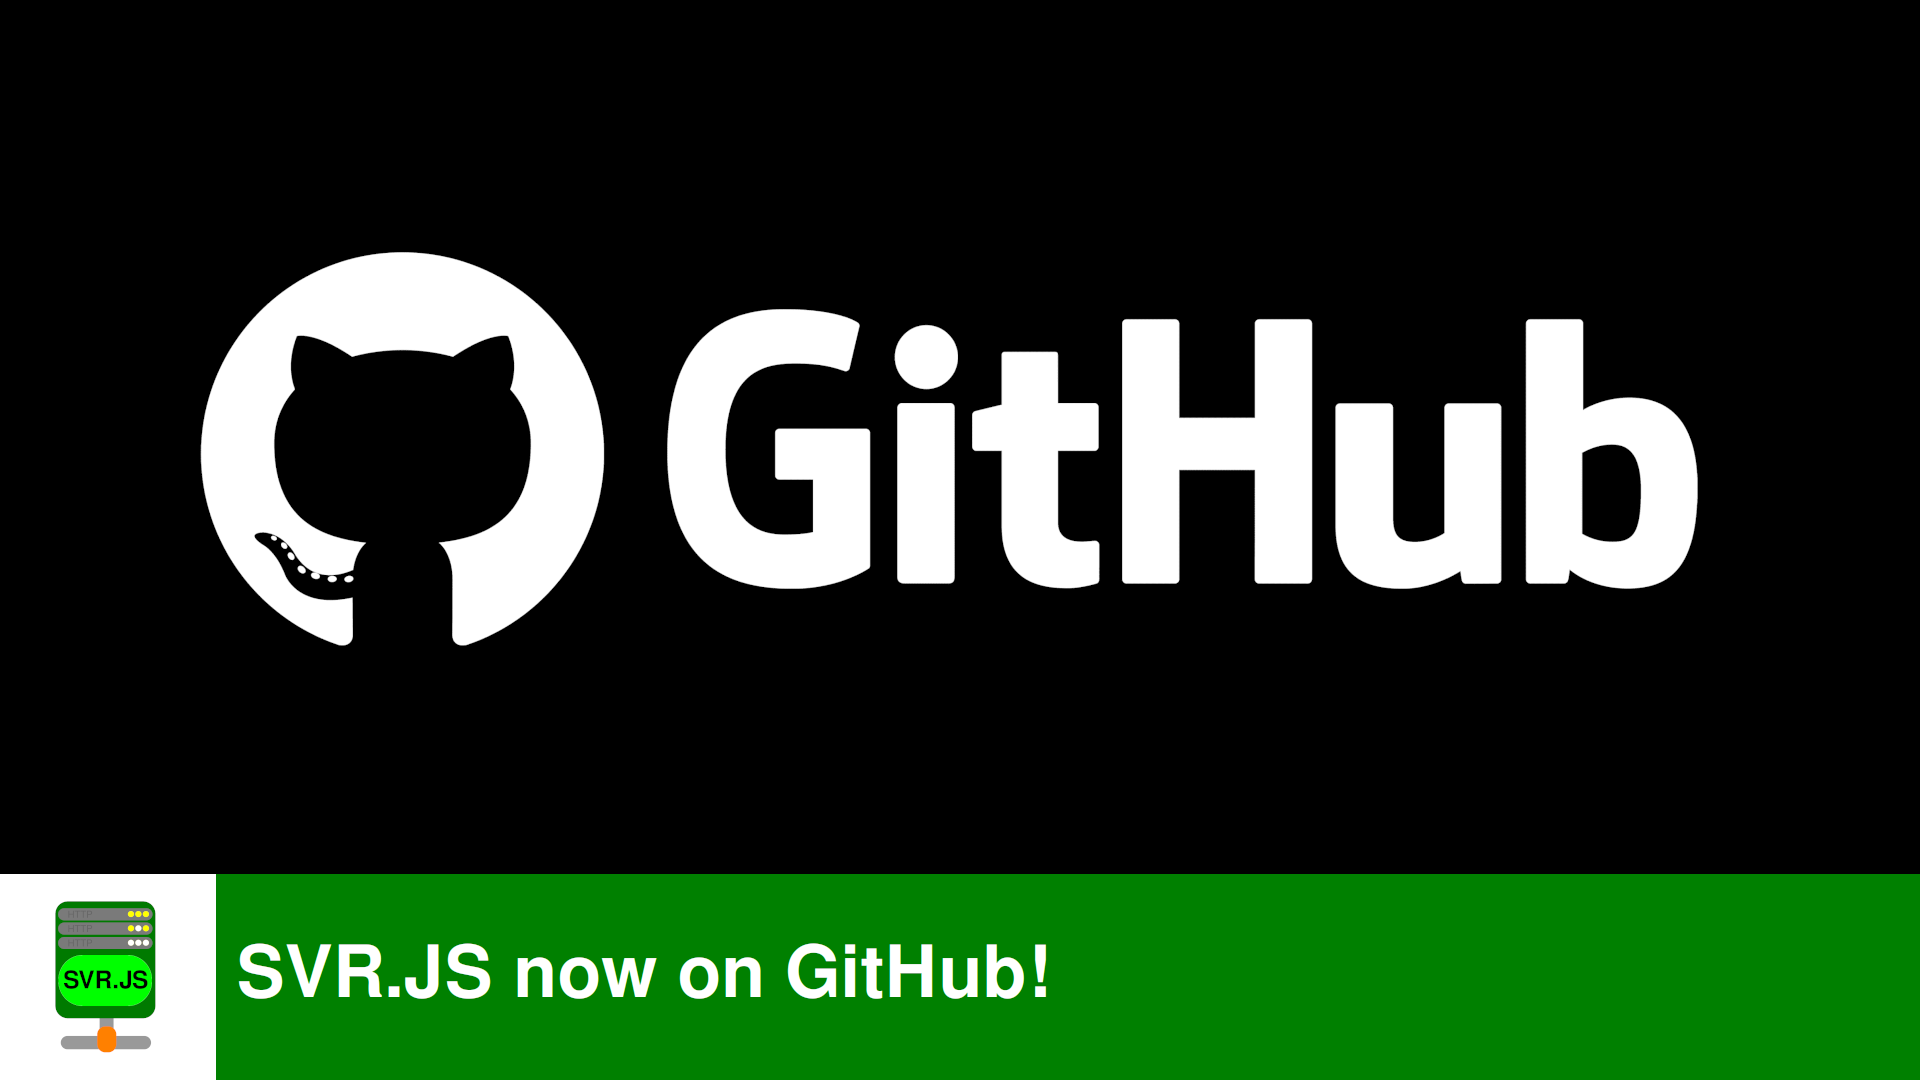 SVR.JS now on GitHub!